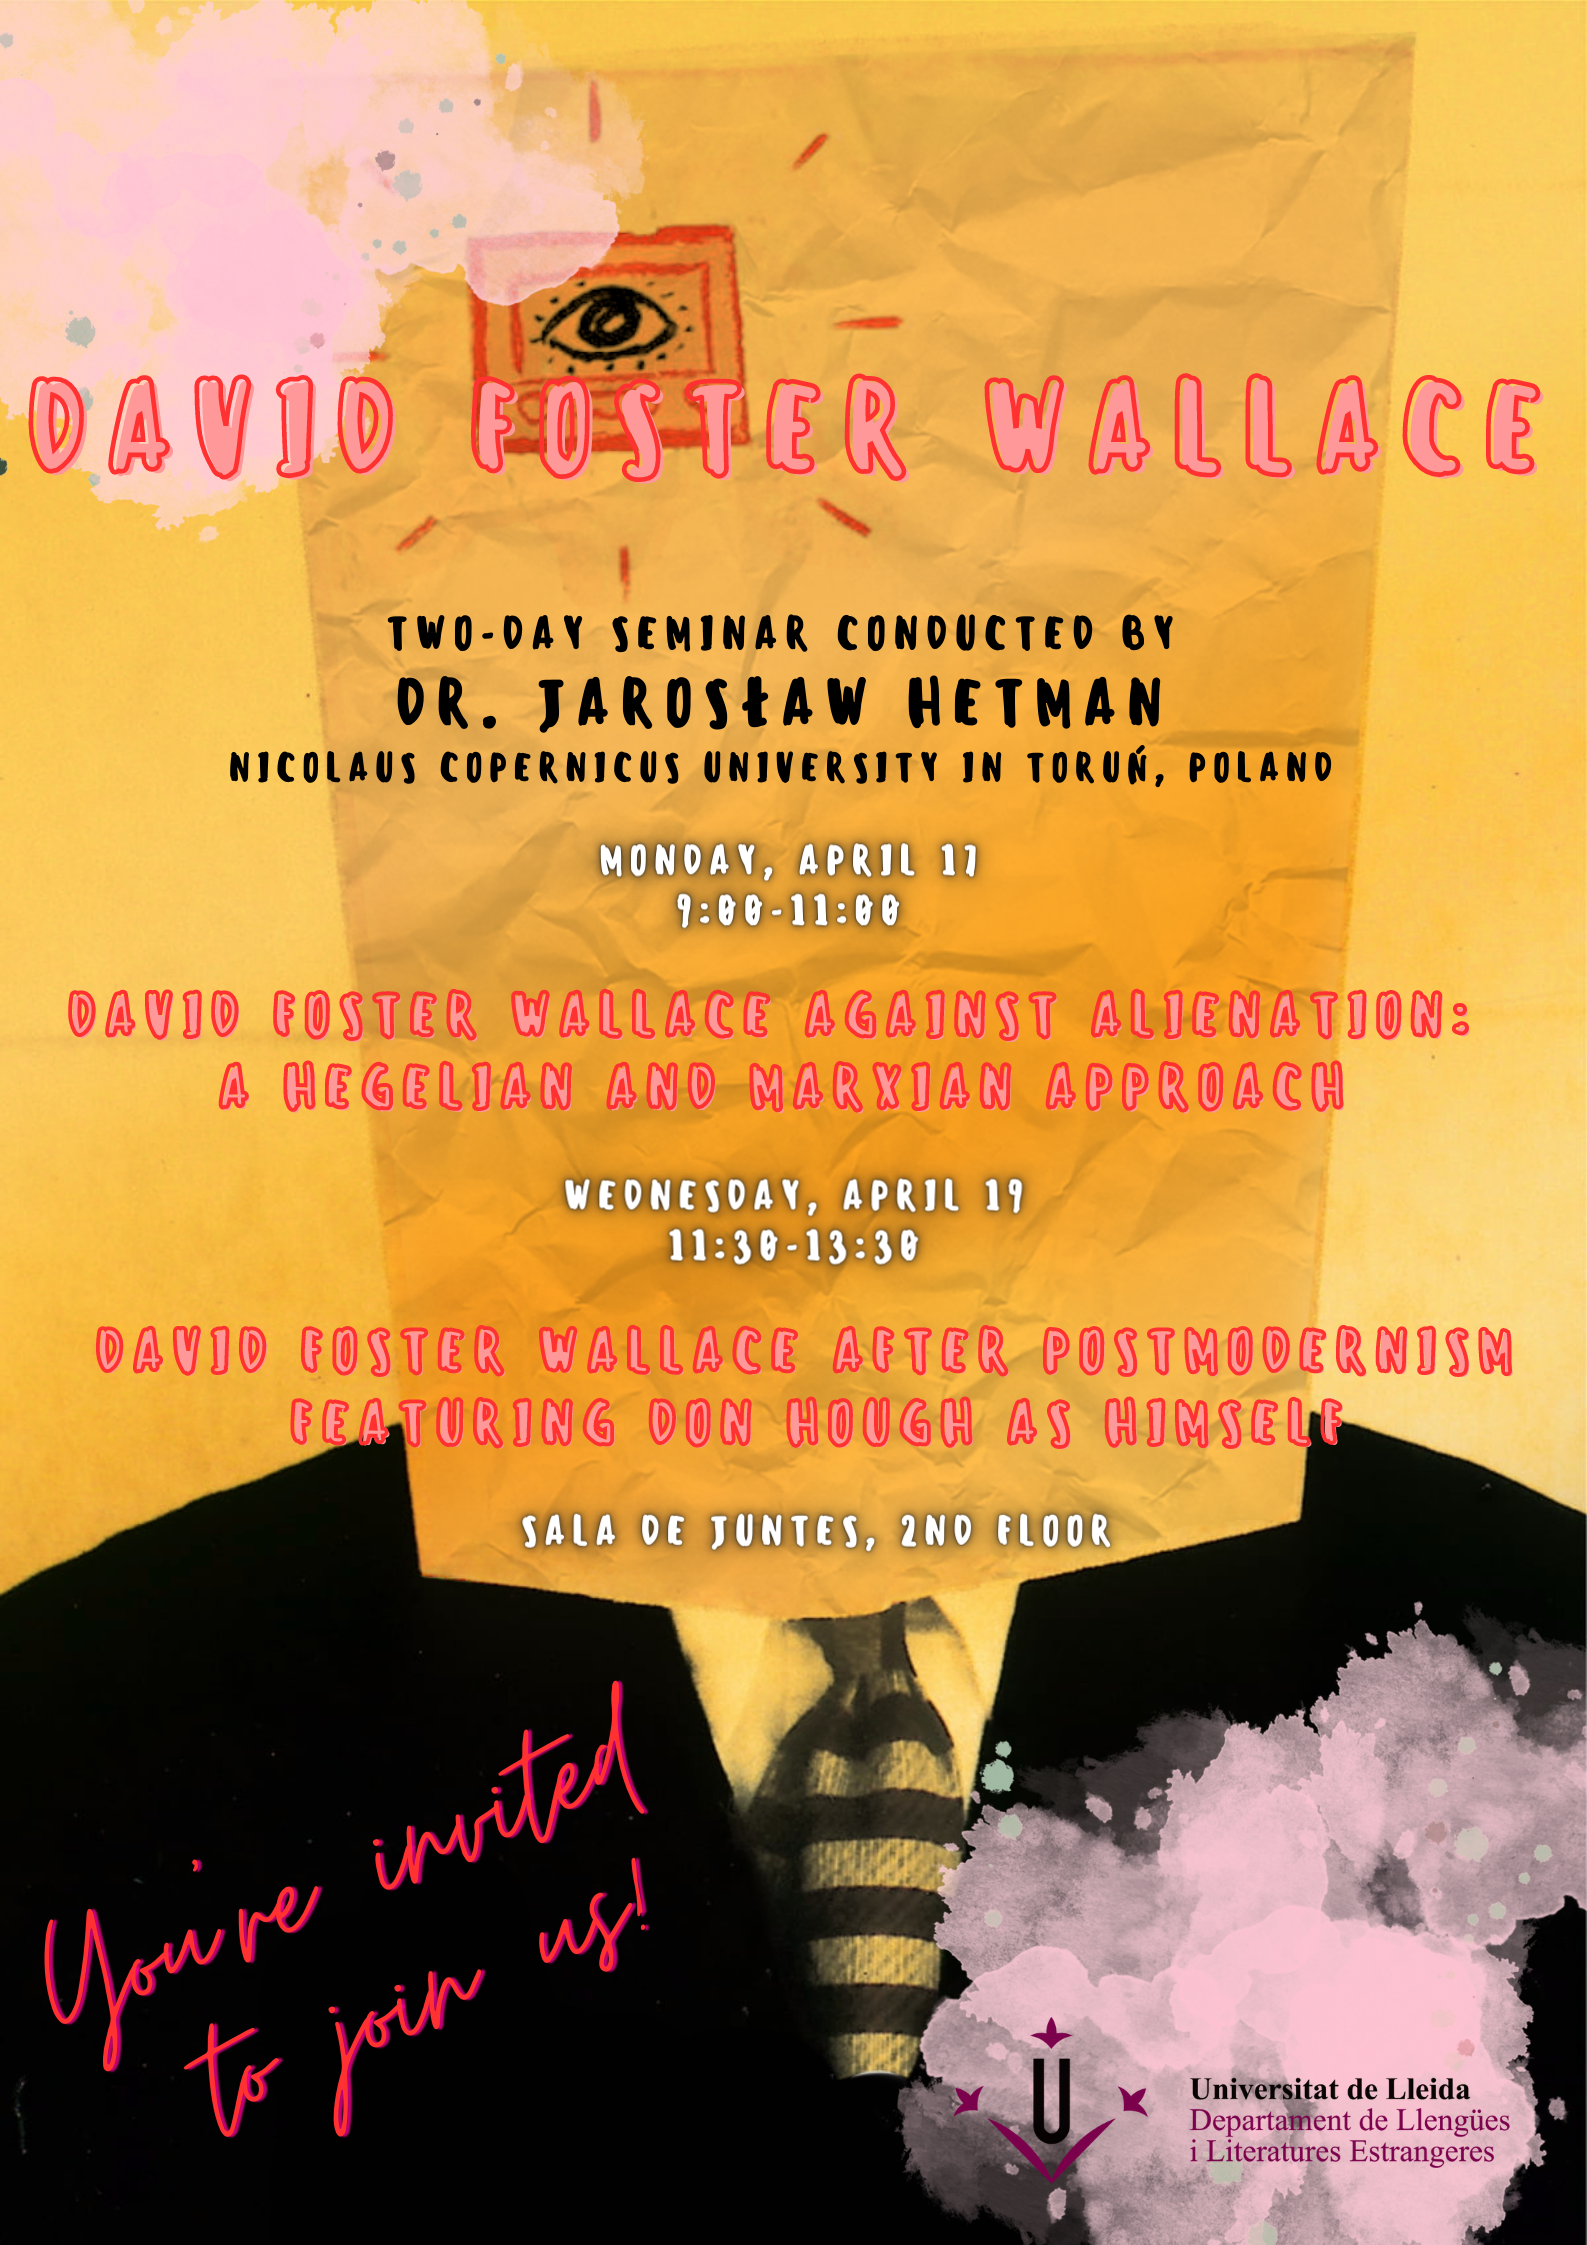 Seminar on David Foster Wallace